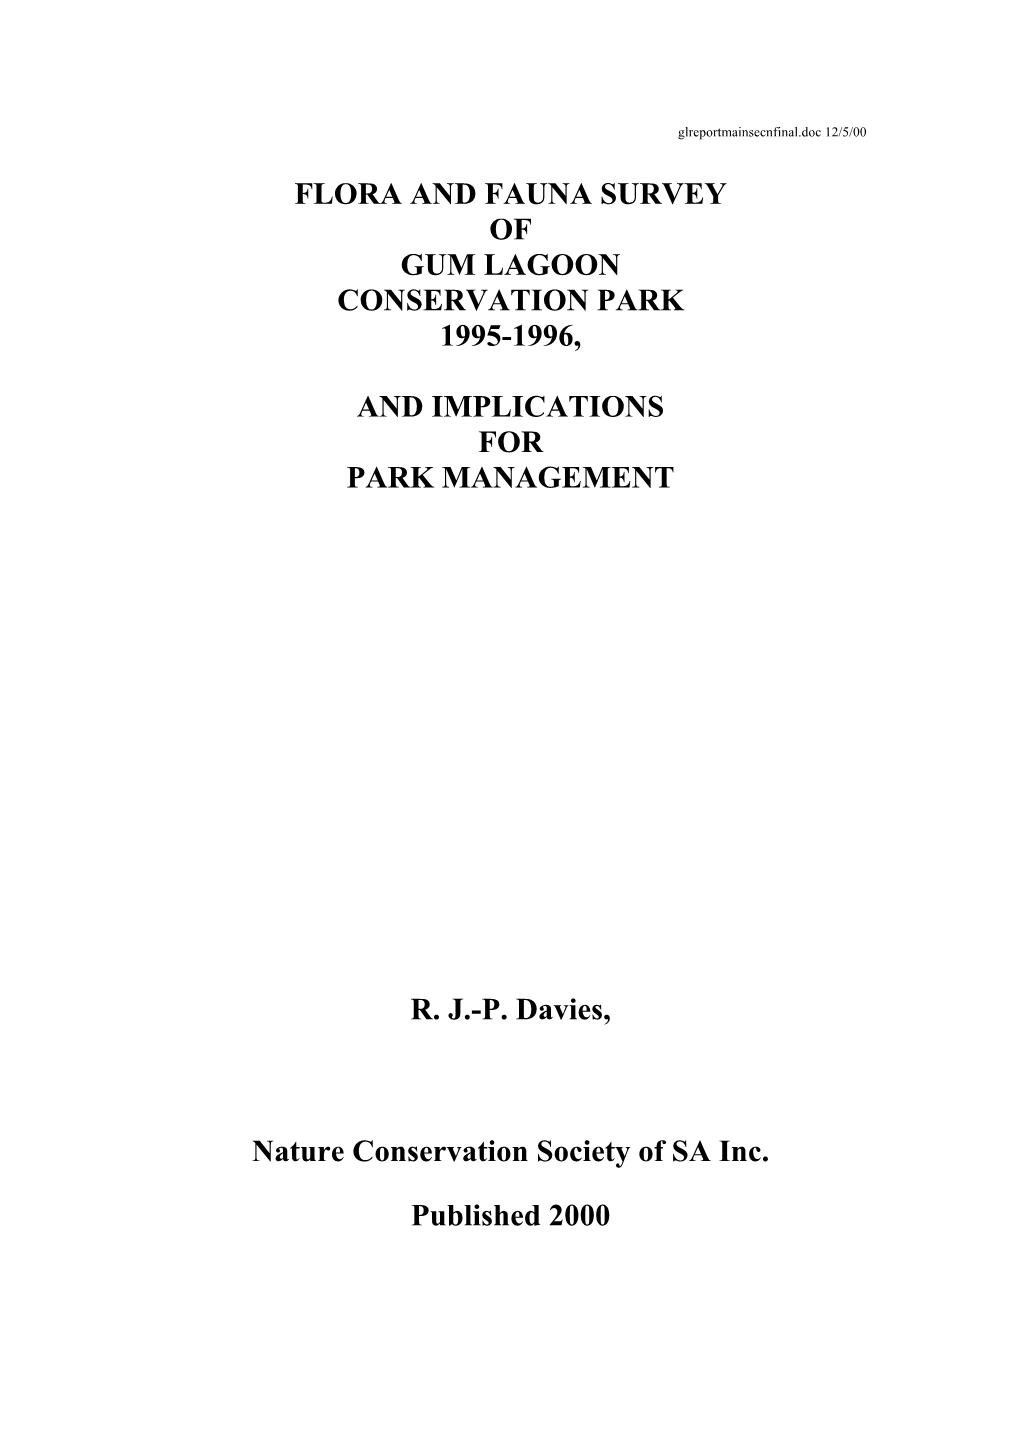 Flora and Fauna Survey of Gum Lagoon Conservation Park 1995-1996